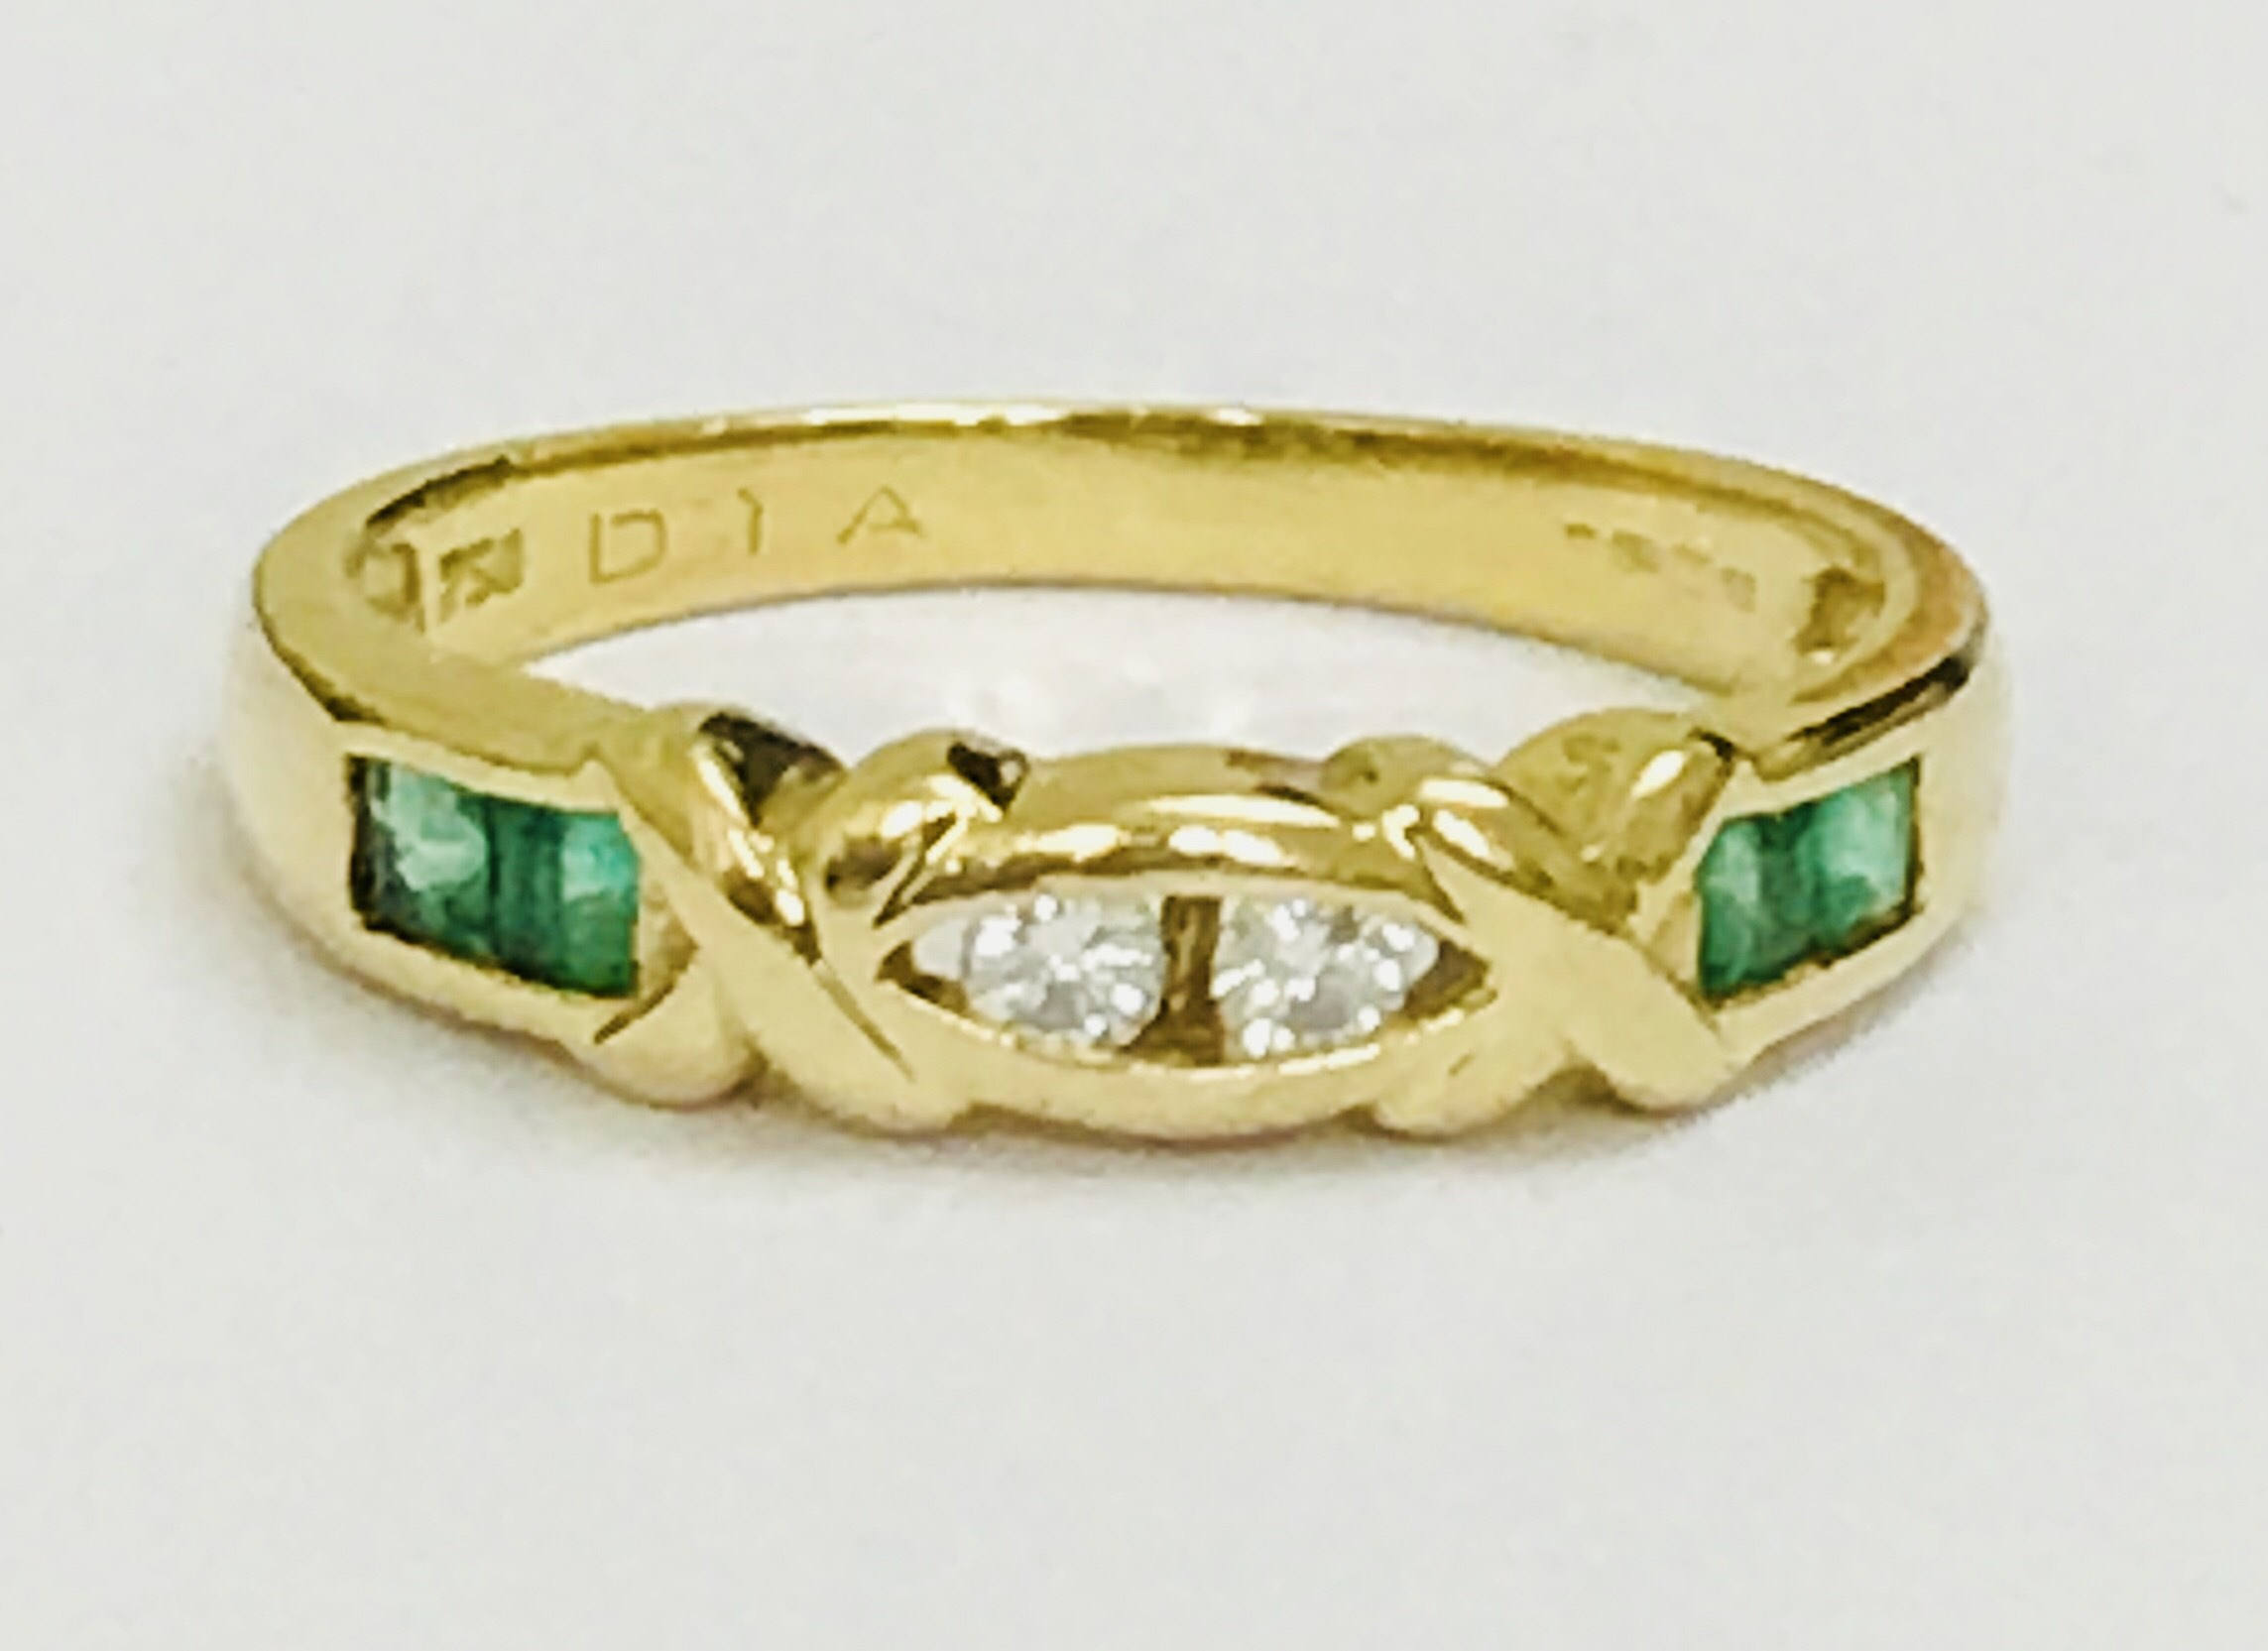 Fabulous vintage 18ct yellow gold Diamond & Emerald ring - fully hallmarked